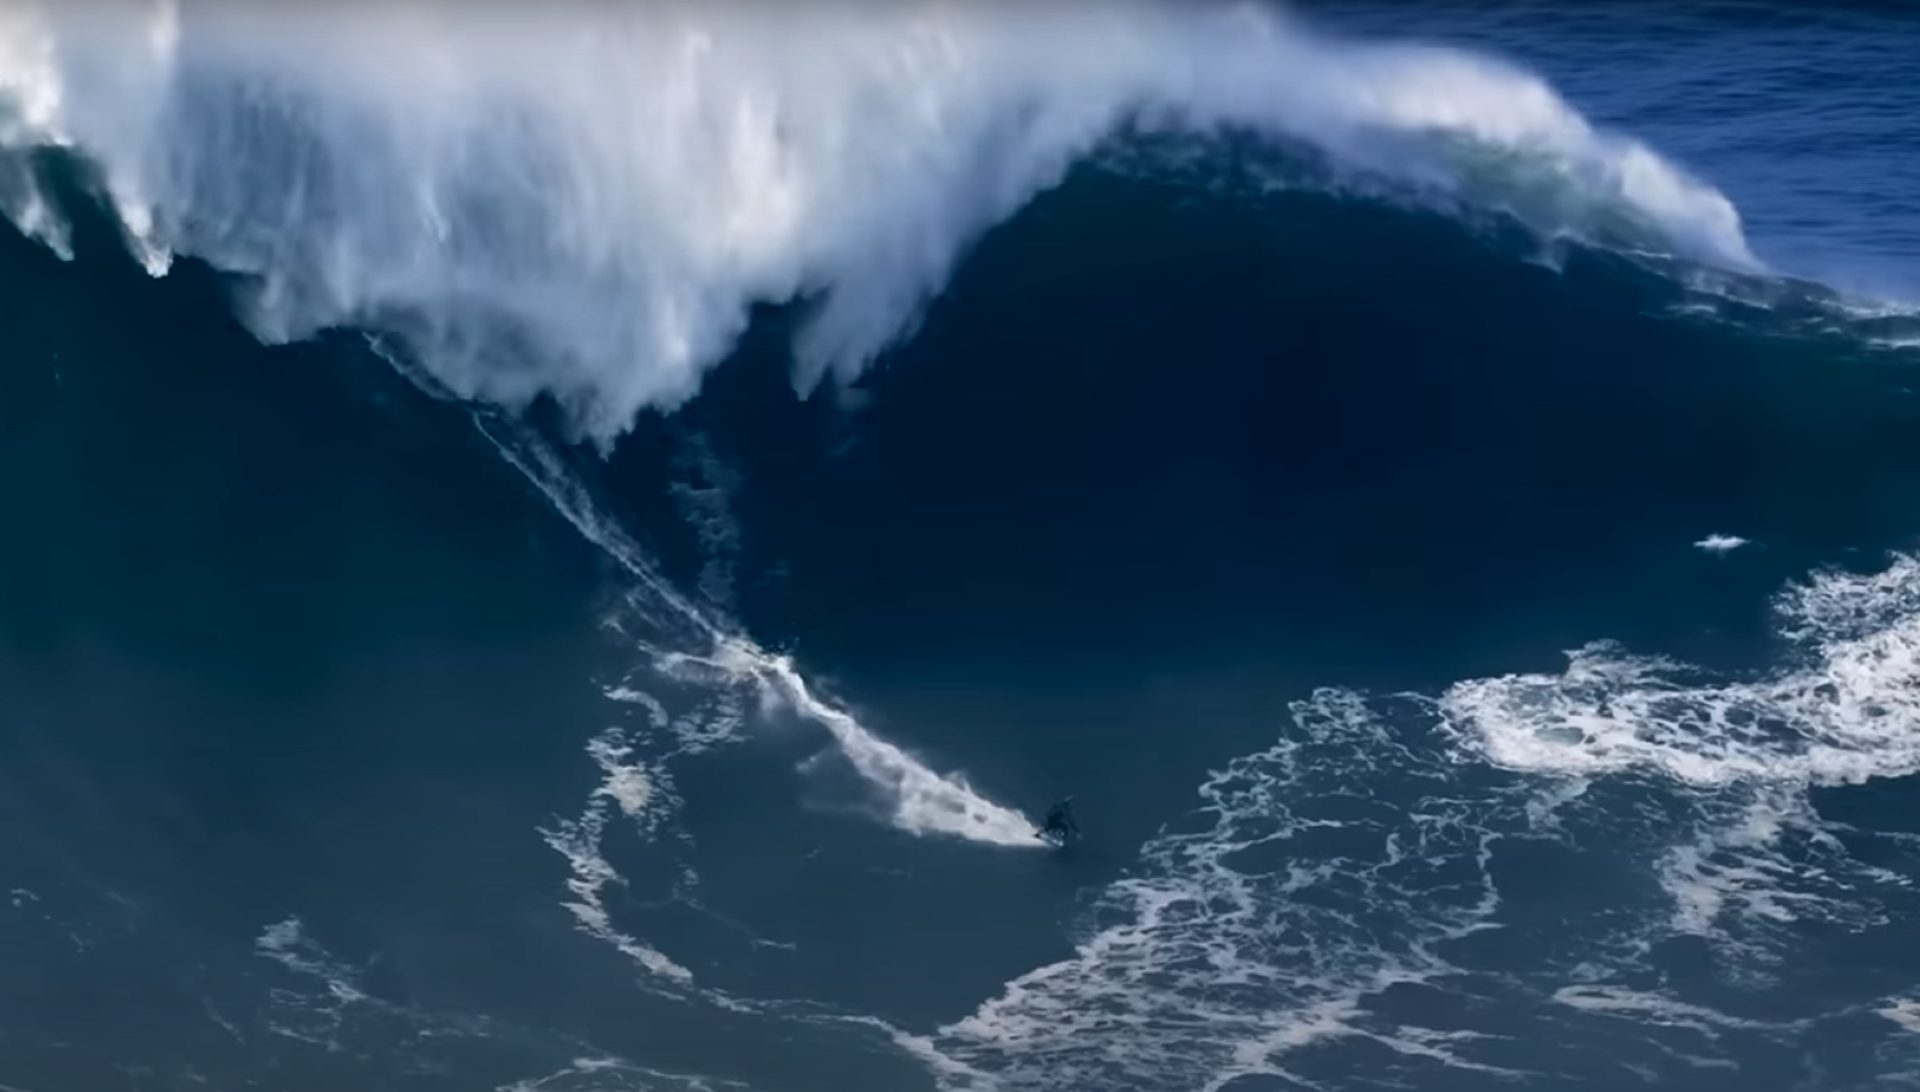 Largest wave surfed